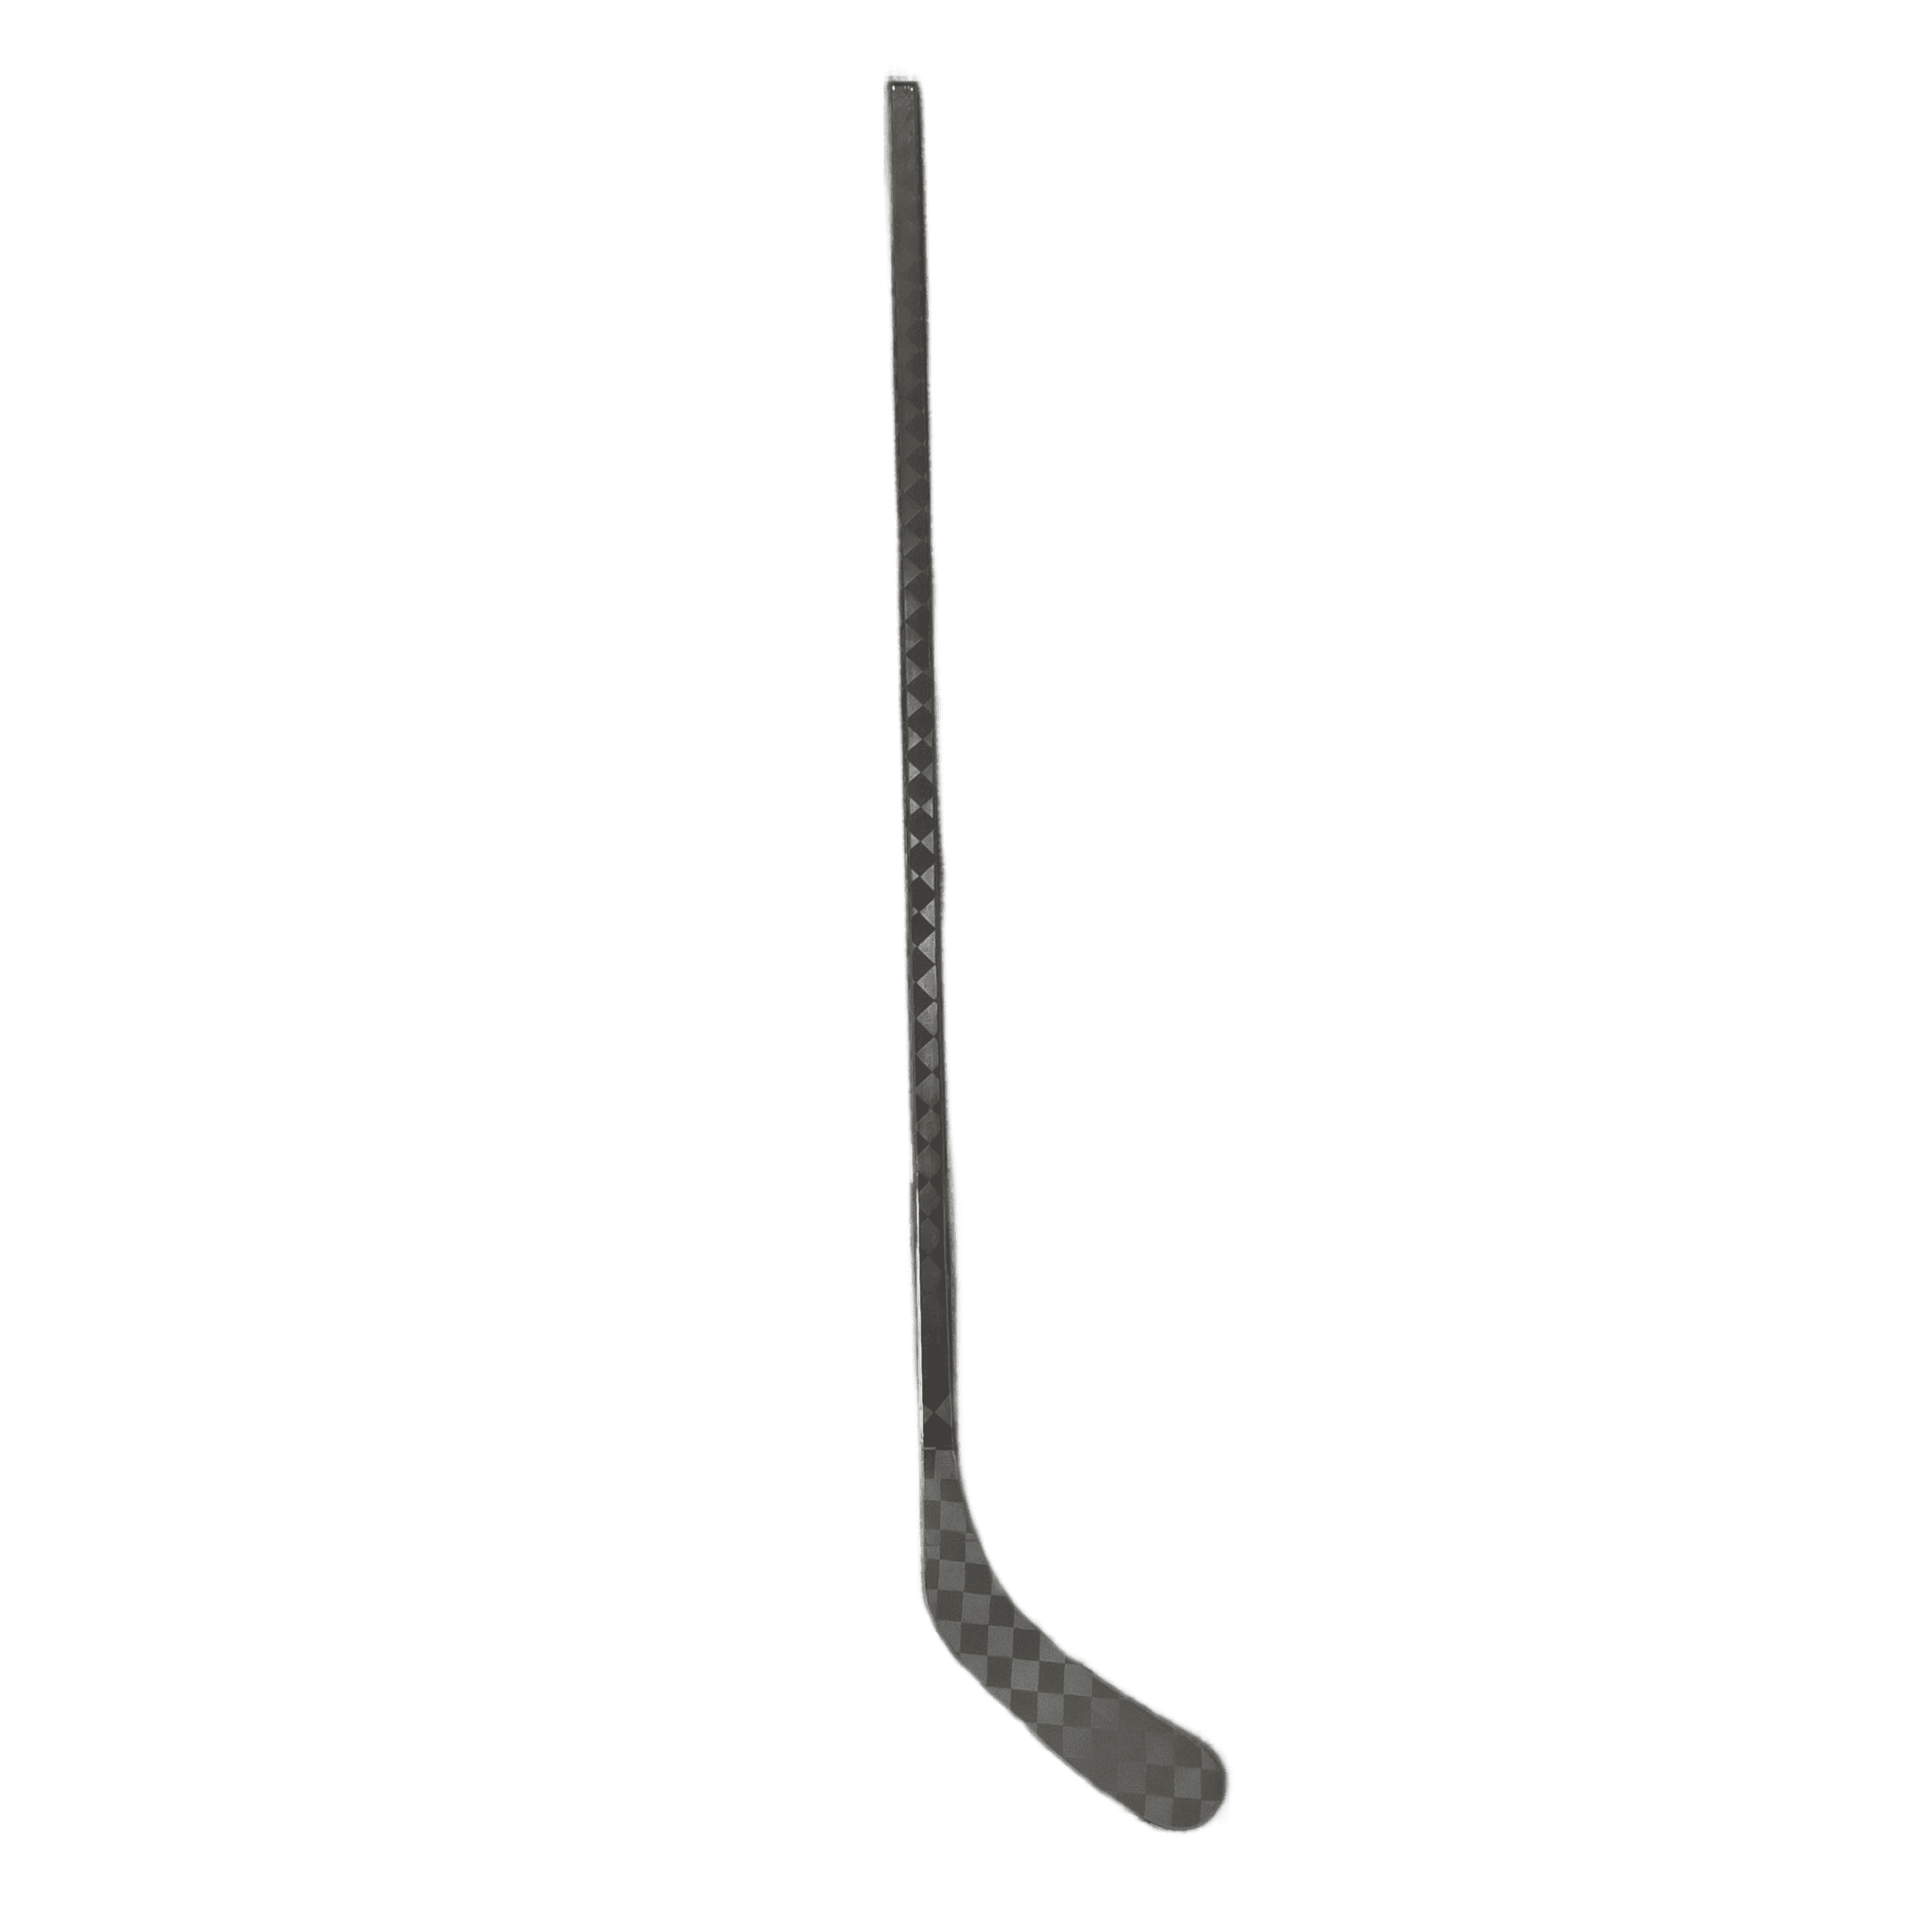 Versatile hockey sticks